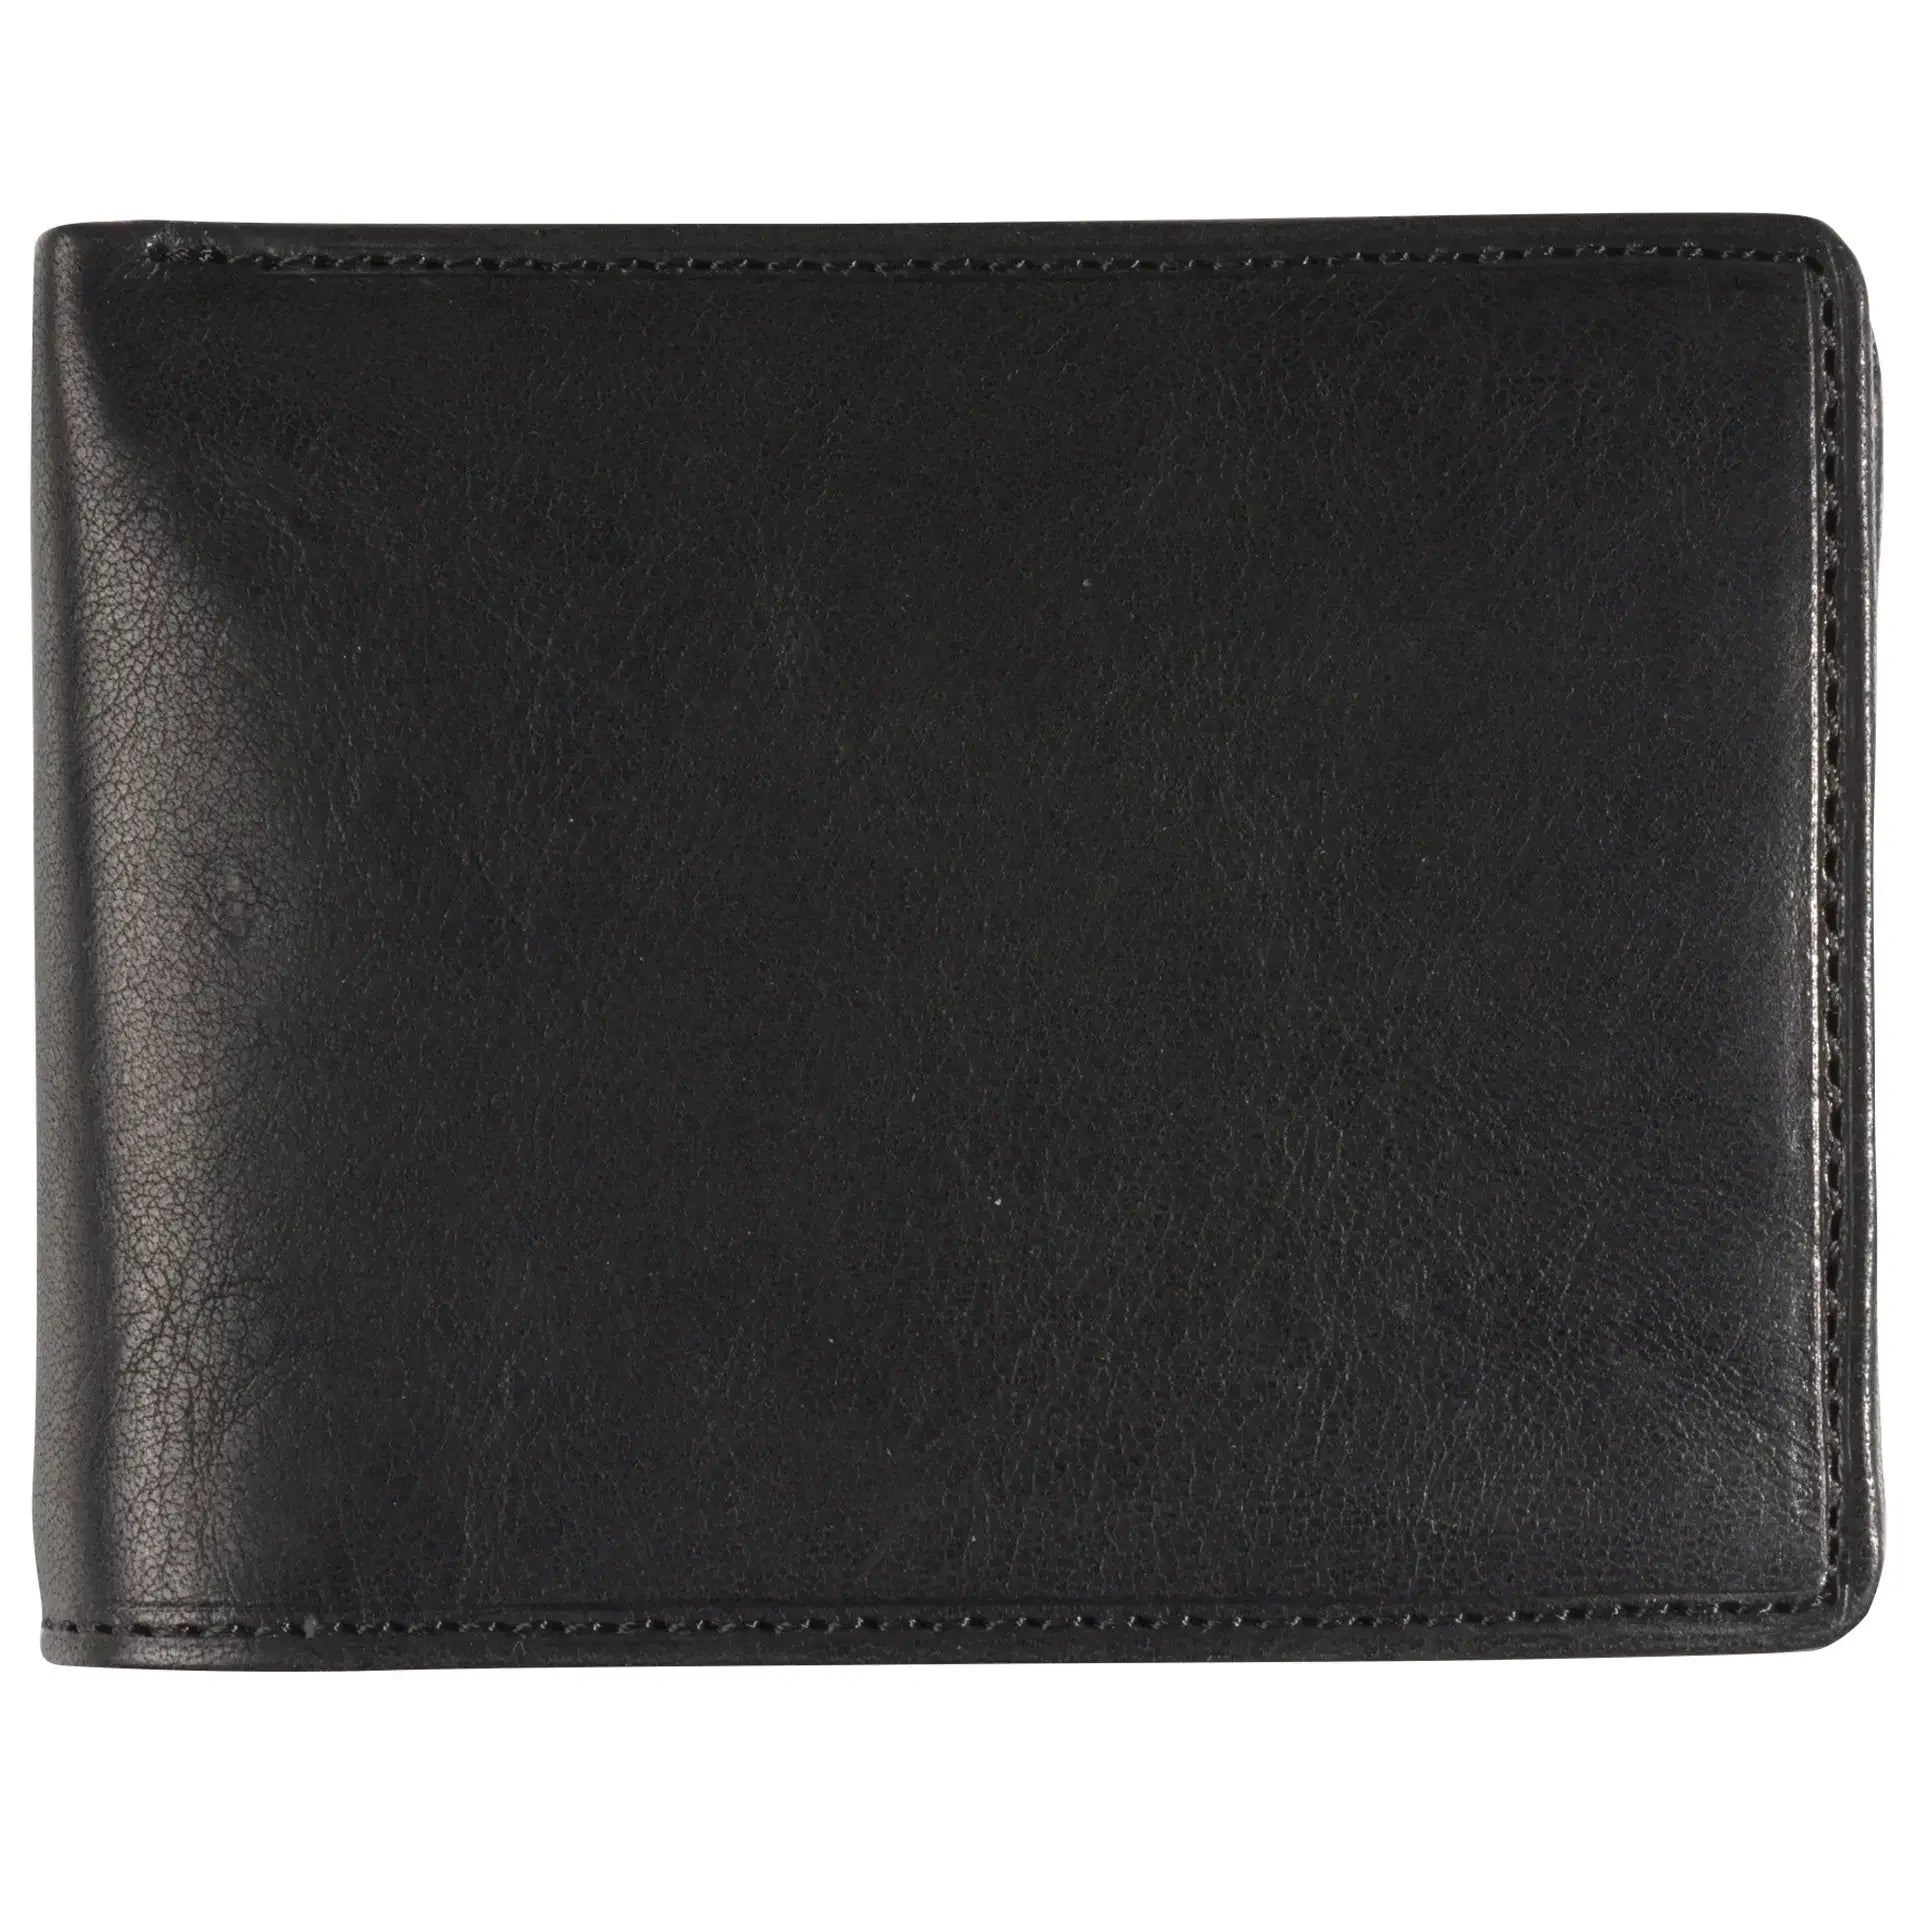 Tony Perotti Furbo wallet 11 cm - Dark brown